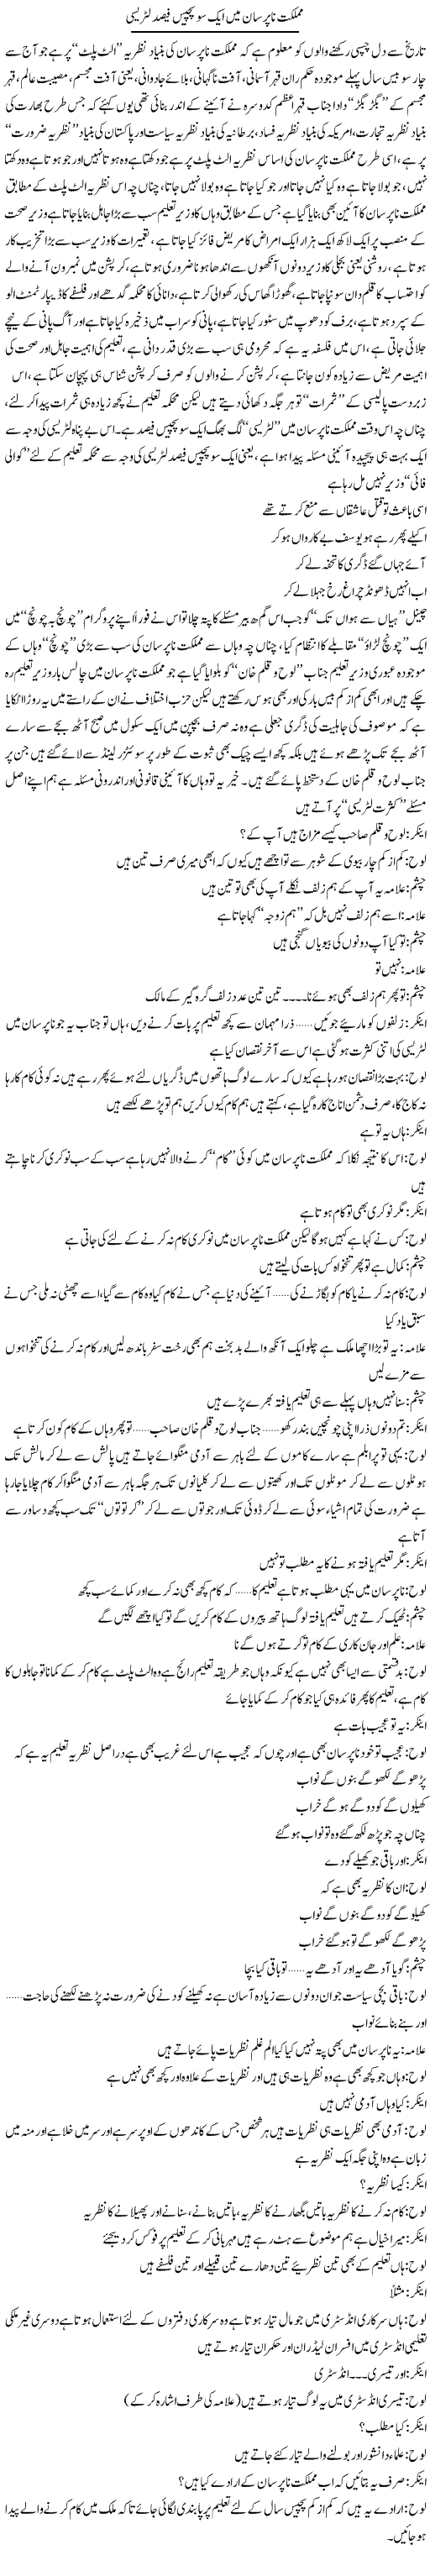 Mumlikat Na Pursan Main Aik So Pachis Fisad Litracy | Saad Ullah Jan Barq | Daily Urdu Columns